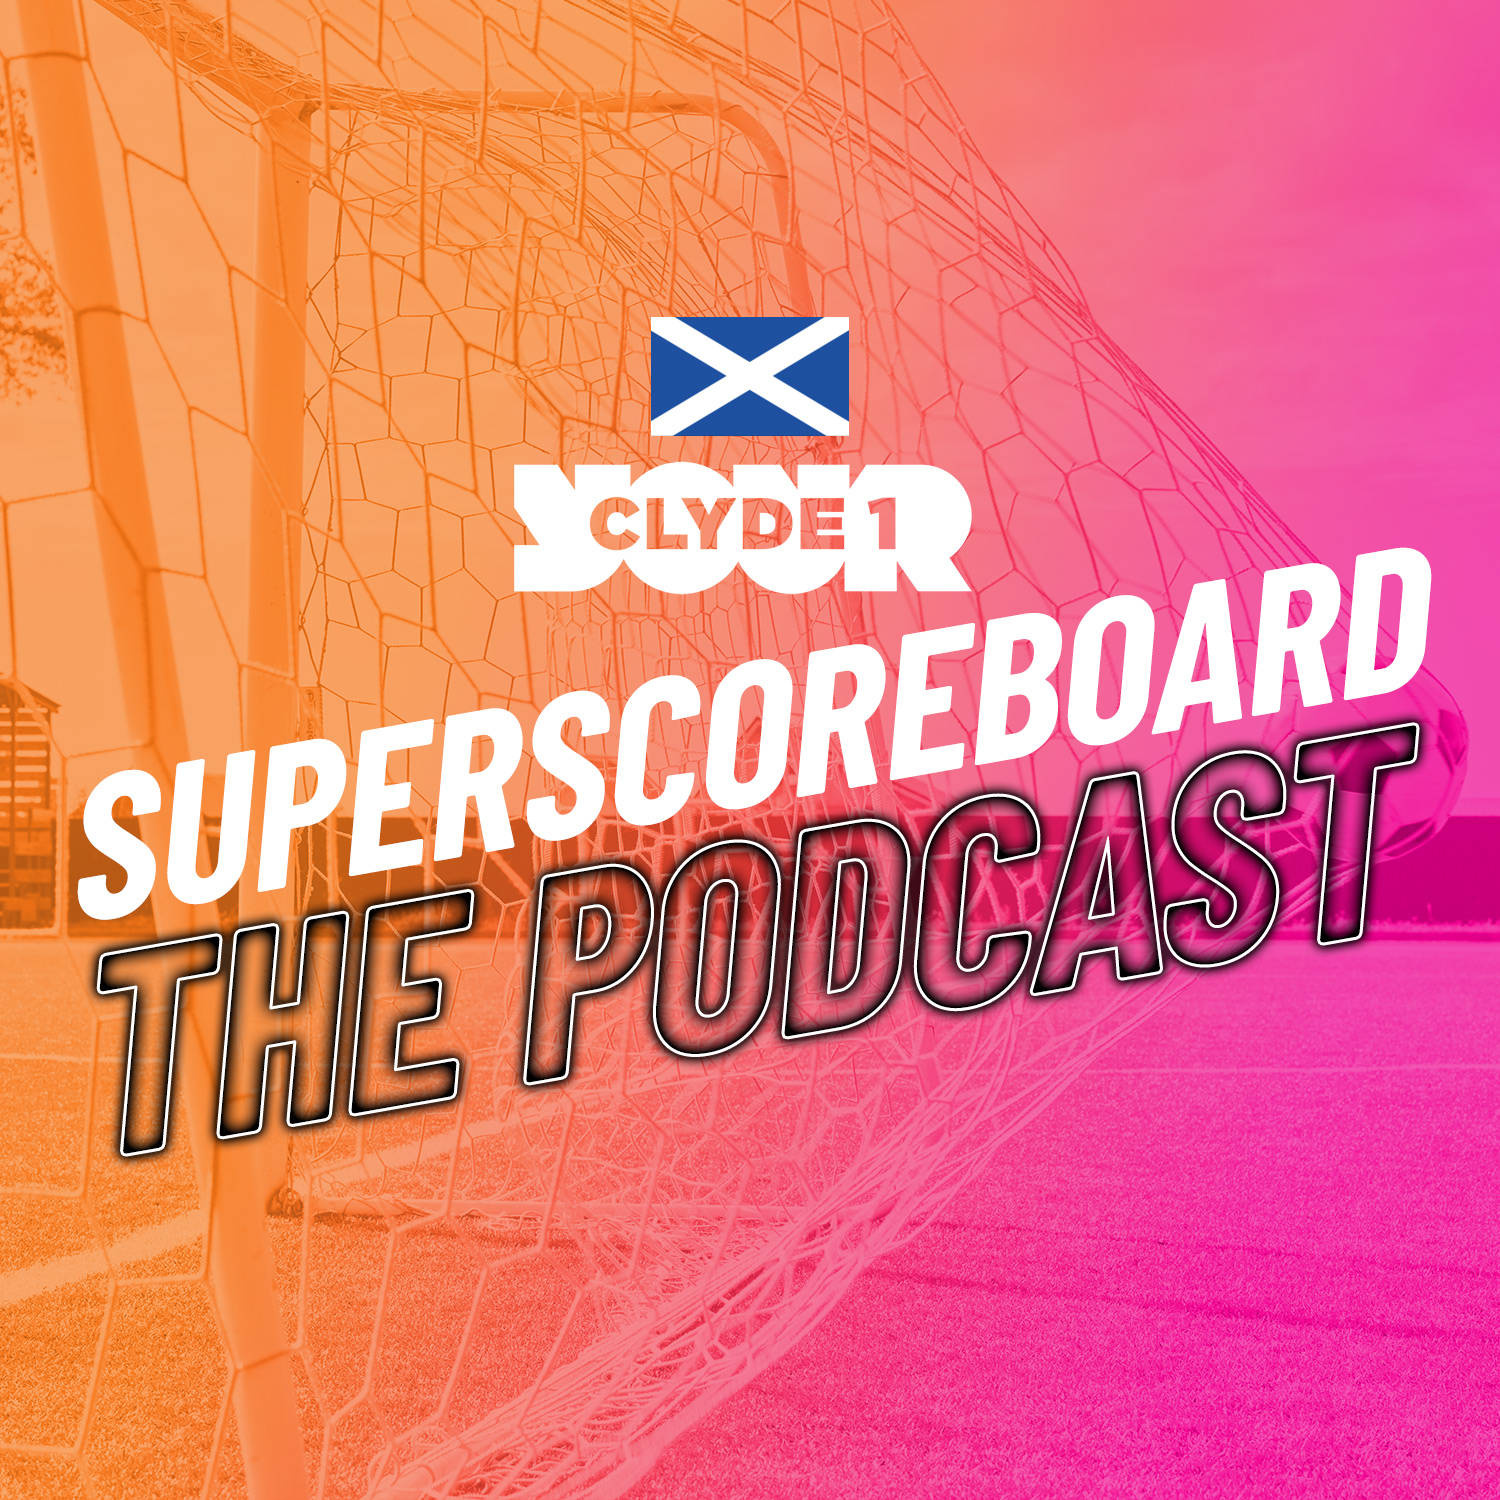 Monday 11th December Clyde 1 Superscoreboard